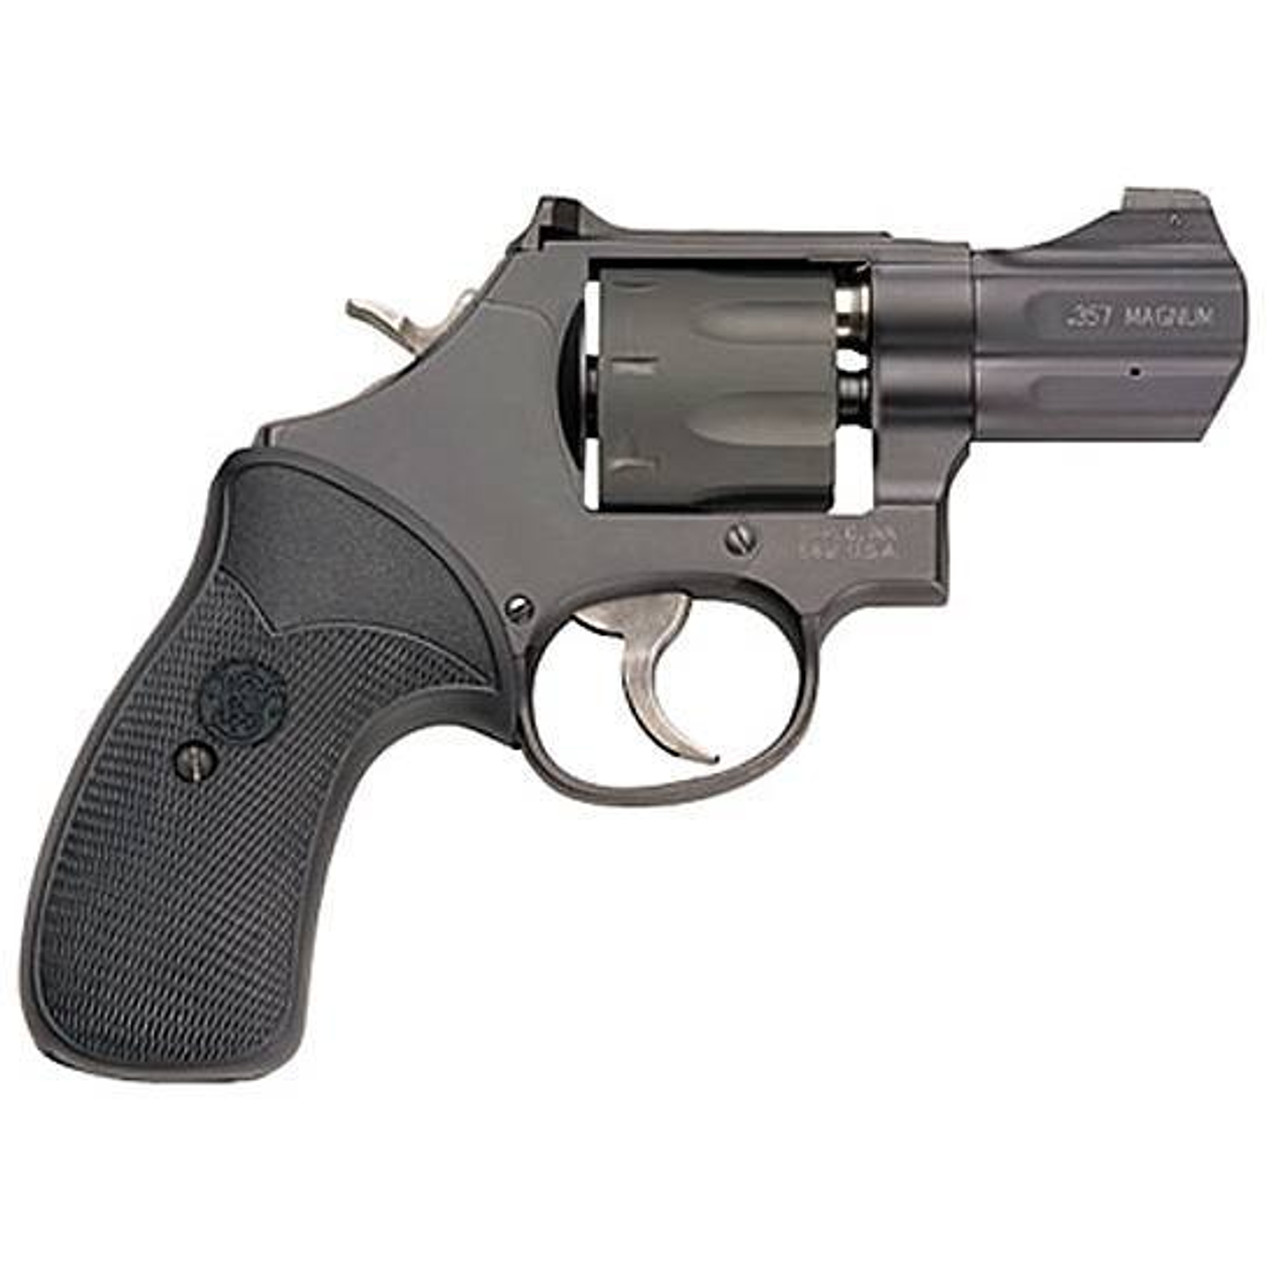 Sandw Model 327 Night Guard Revolver 357 Magnum 2 12 Barrel 8 Rounds Pachmayr Grips Matte Black